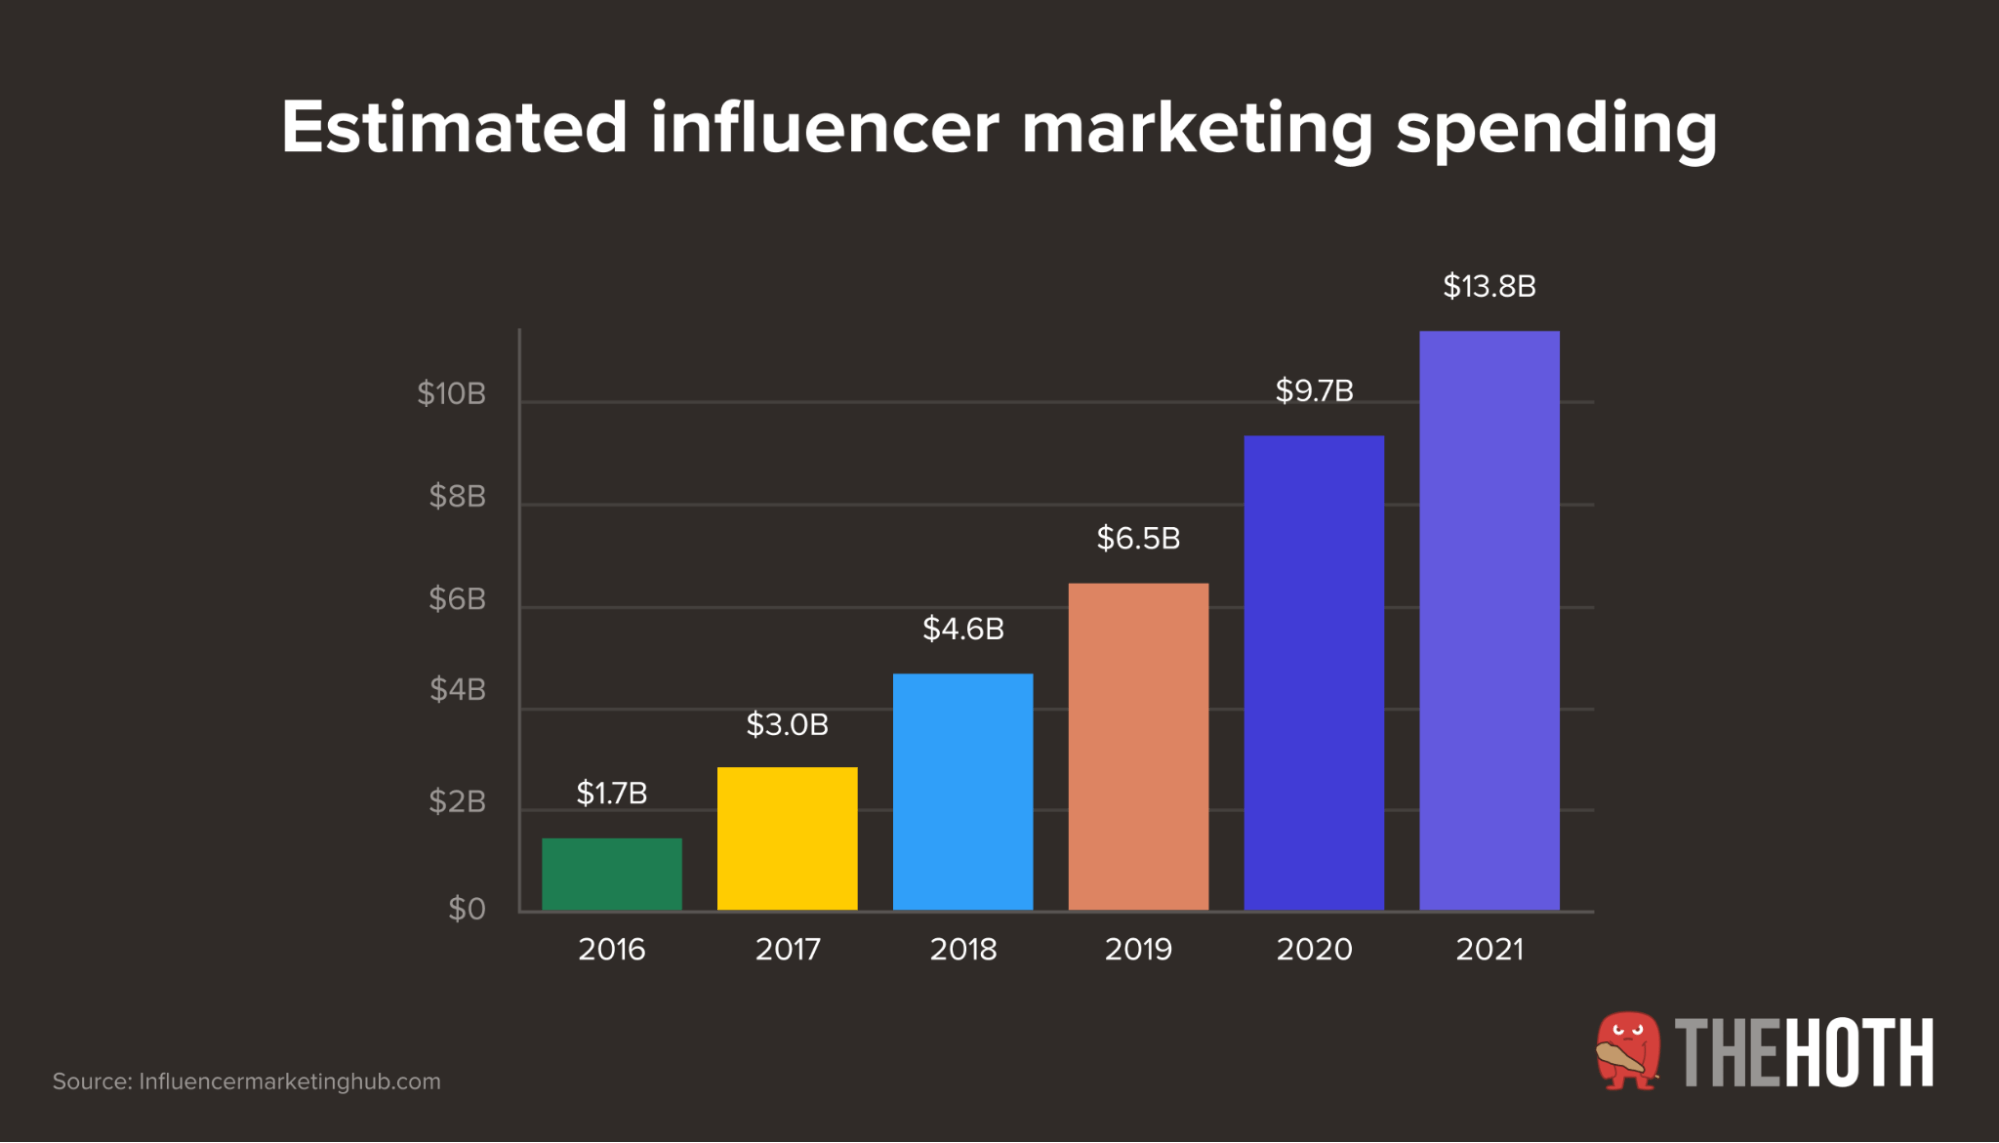 Estimated influencer marketing spending